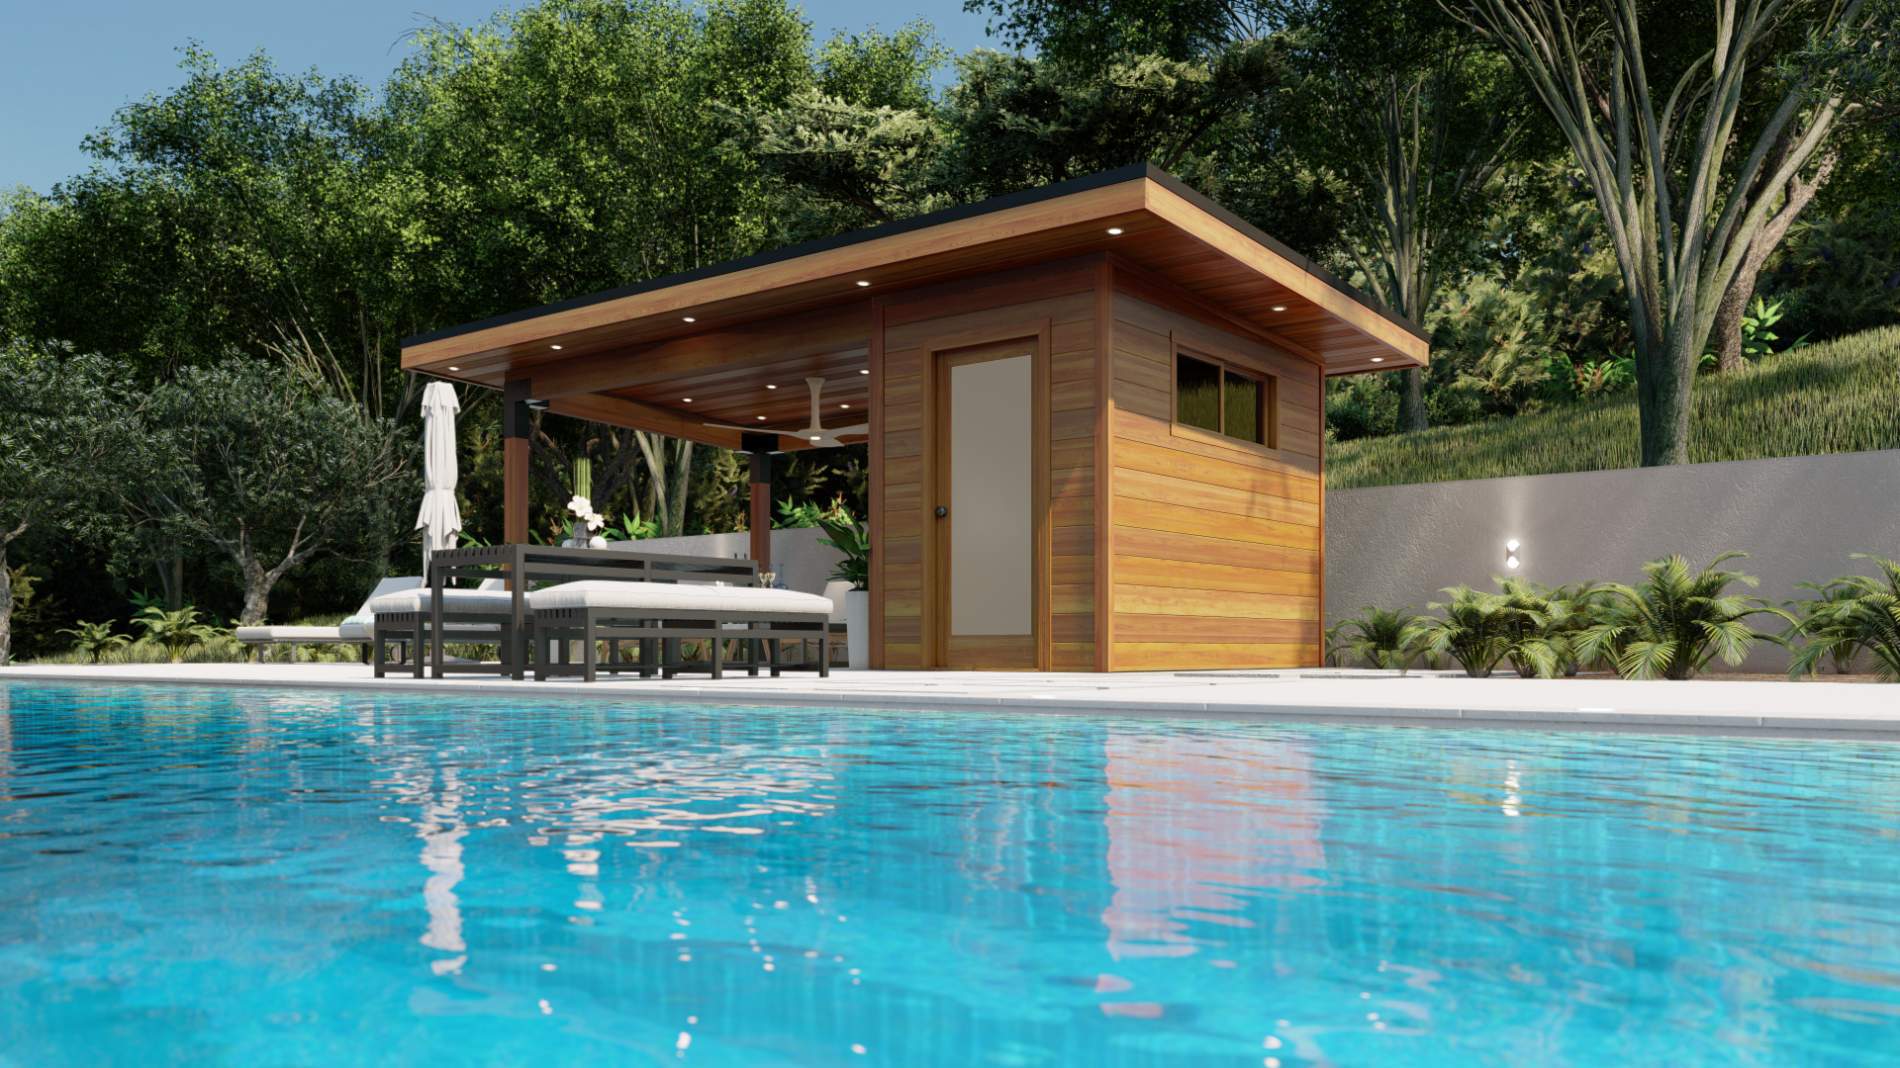 Front right view of 10’ x 20’ Sanara pool cabana – Summerwood Products